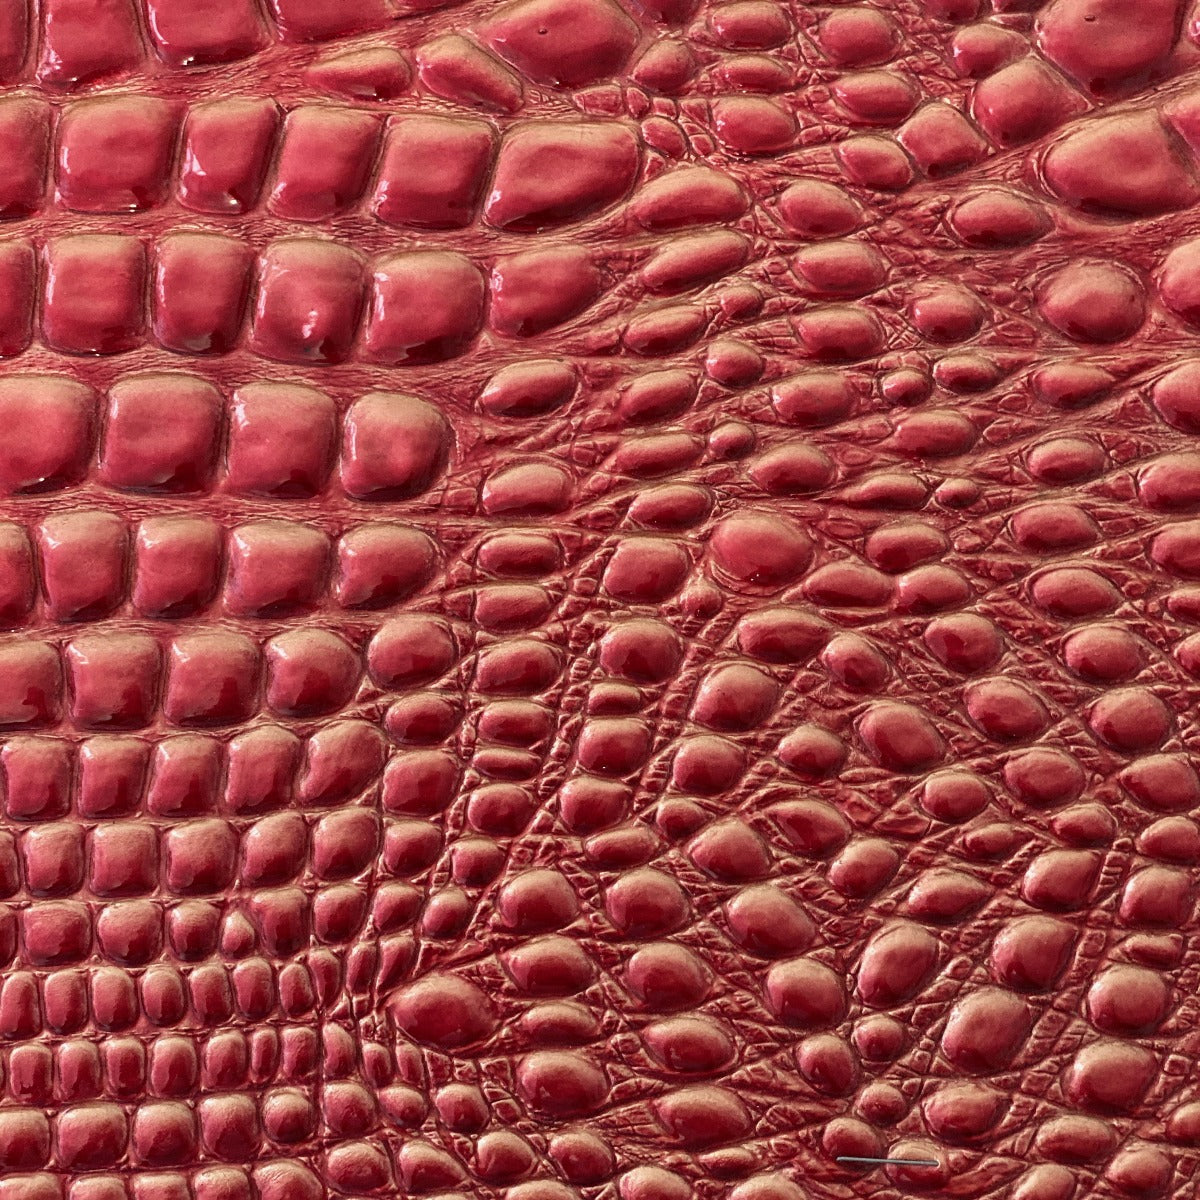 Red Gold Brickell Embossed Crocodile Vinyl Fabric - Fashion Fabrics Los Angeles 